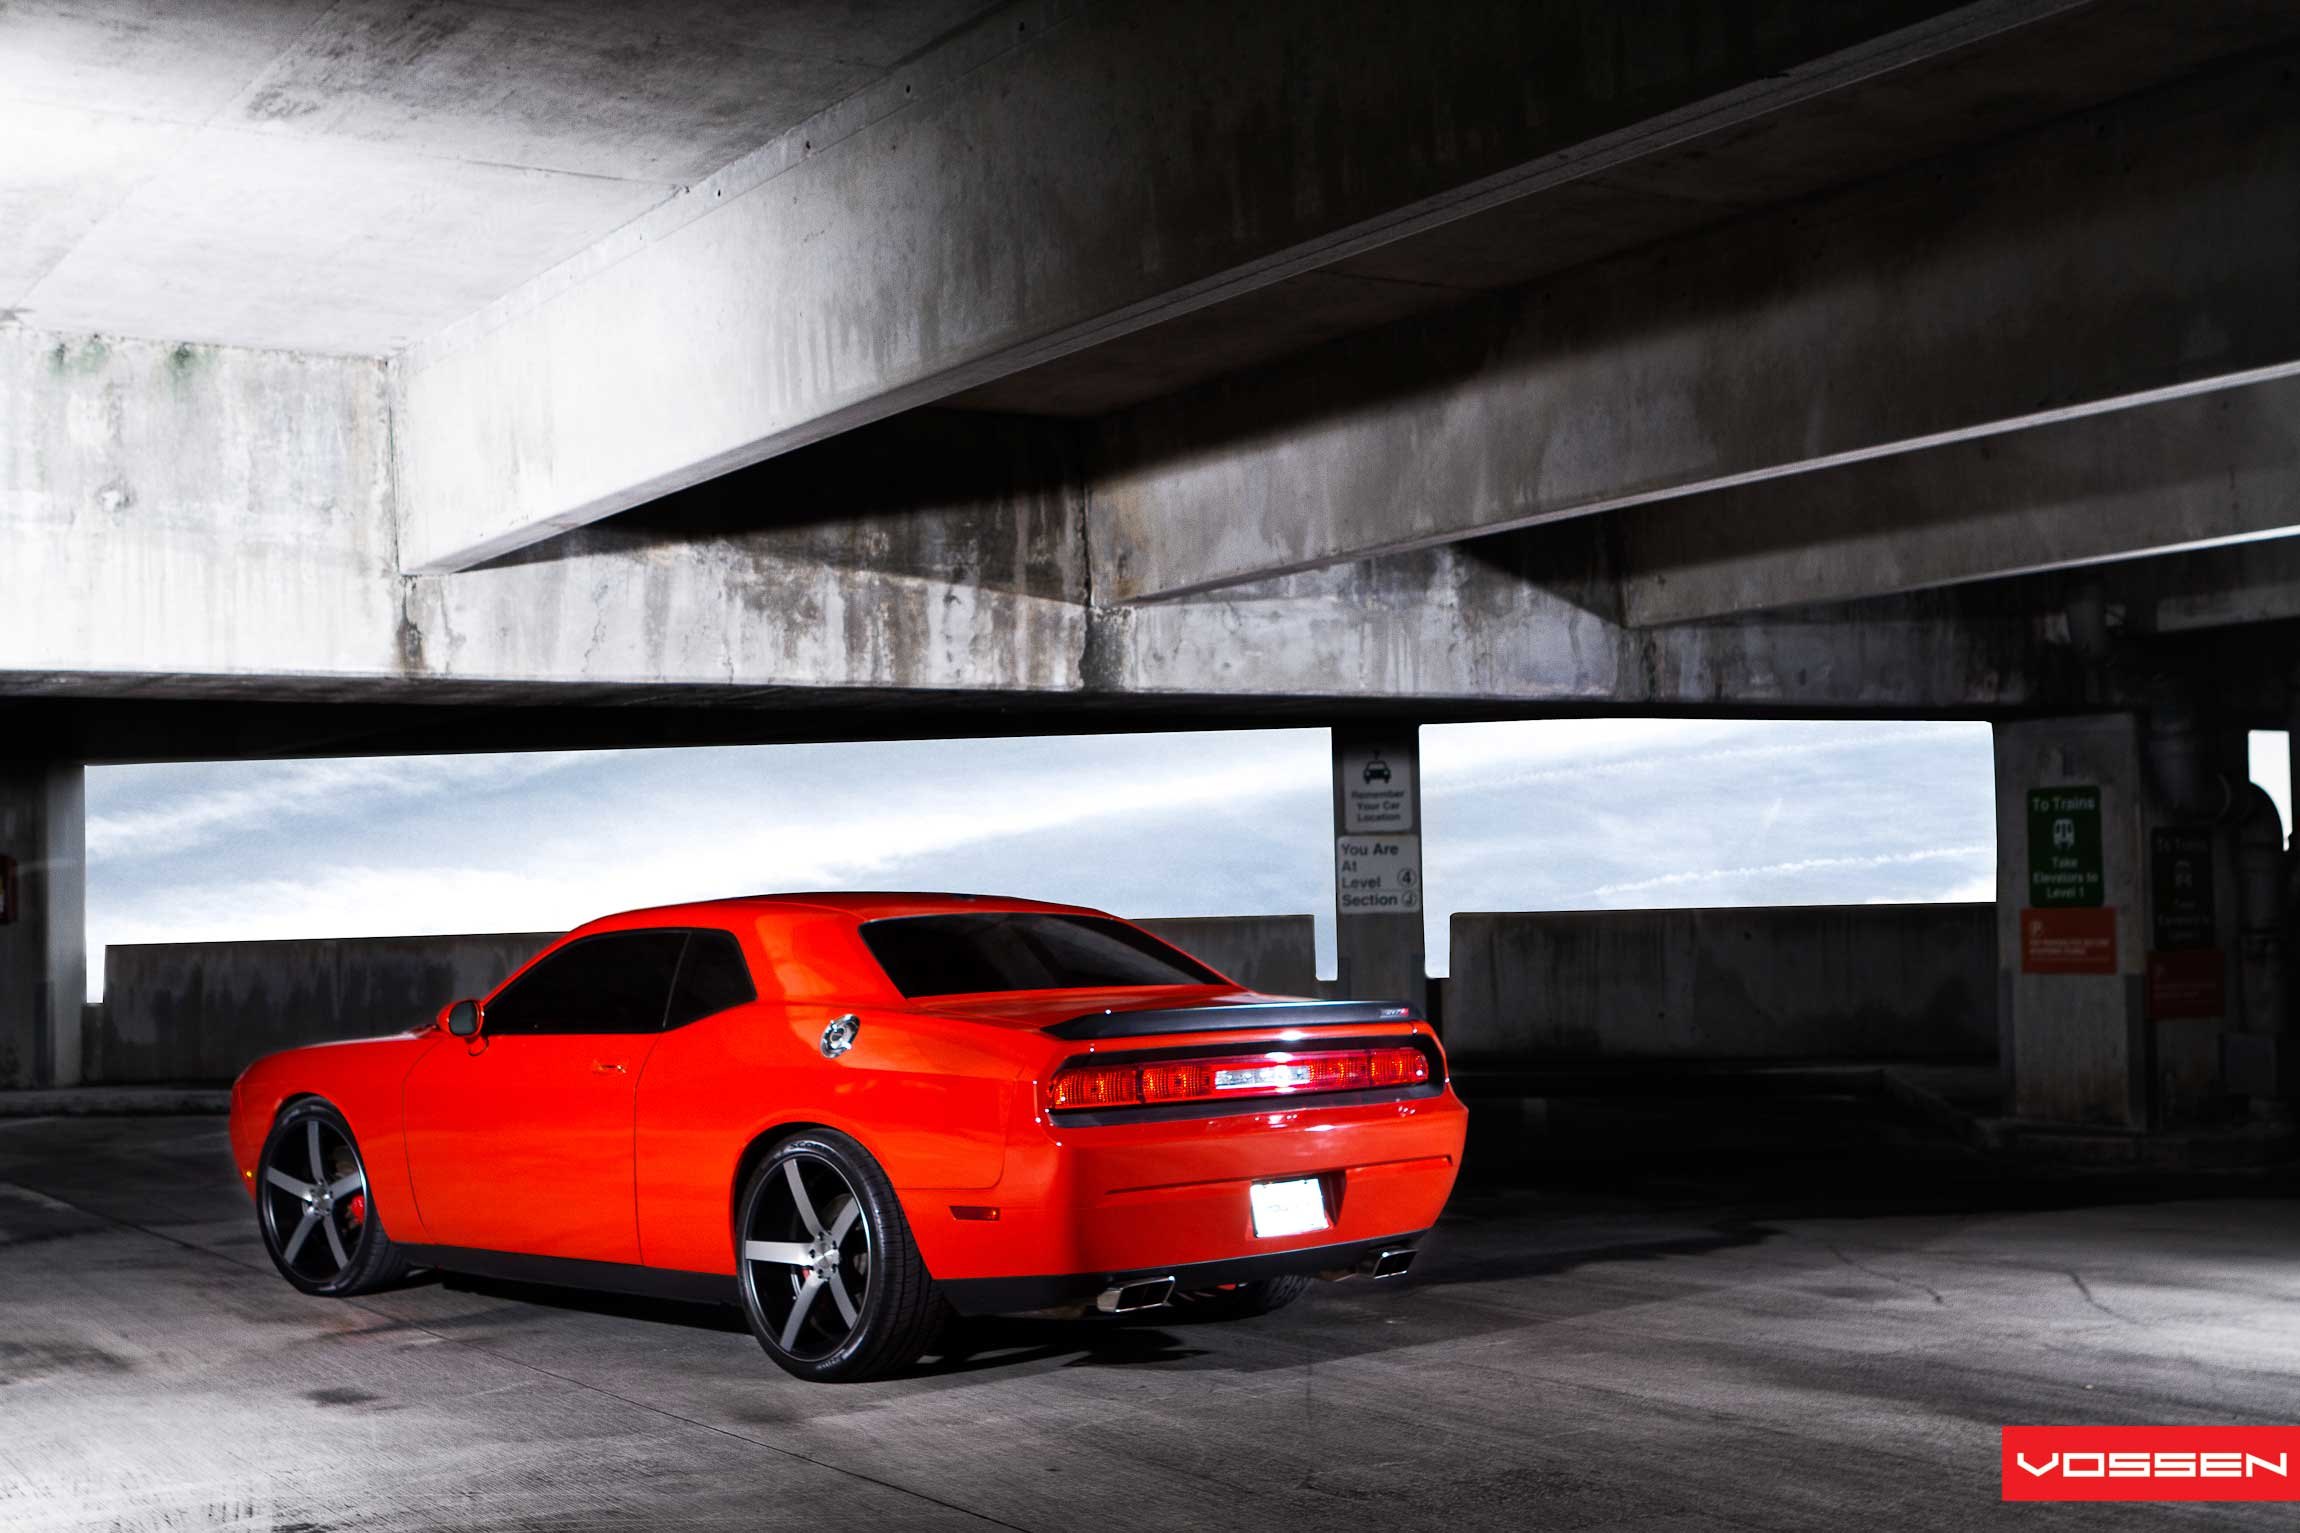 Black Rear Spoiler on Red Dodge Challenger SRT - Photo by Vossen